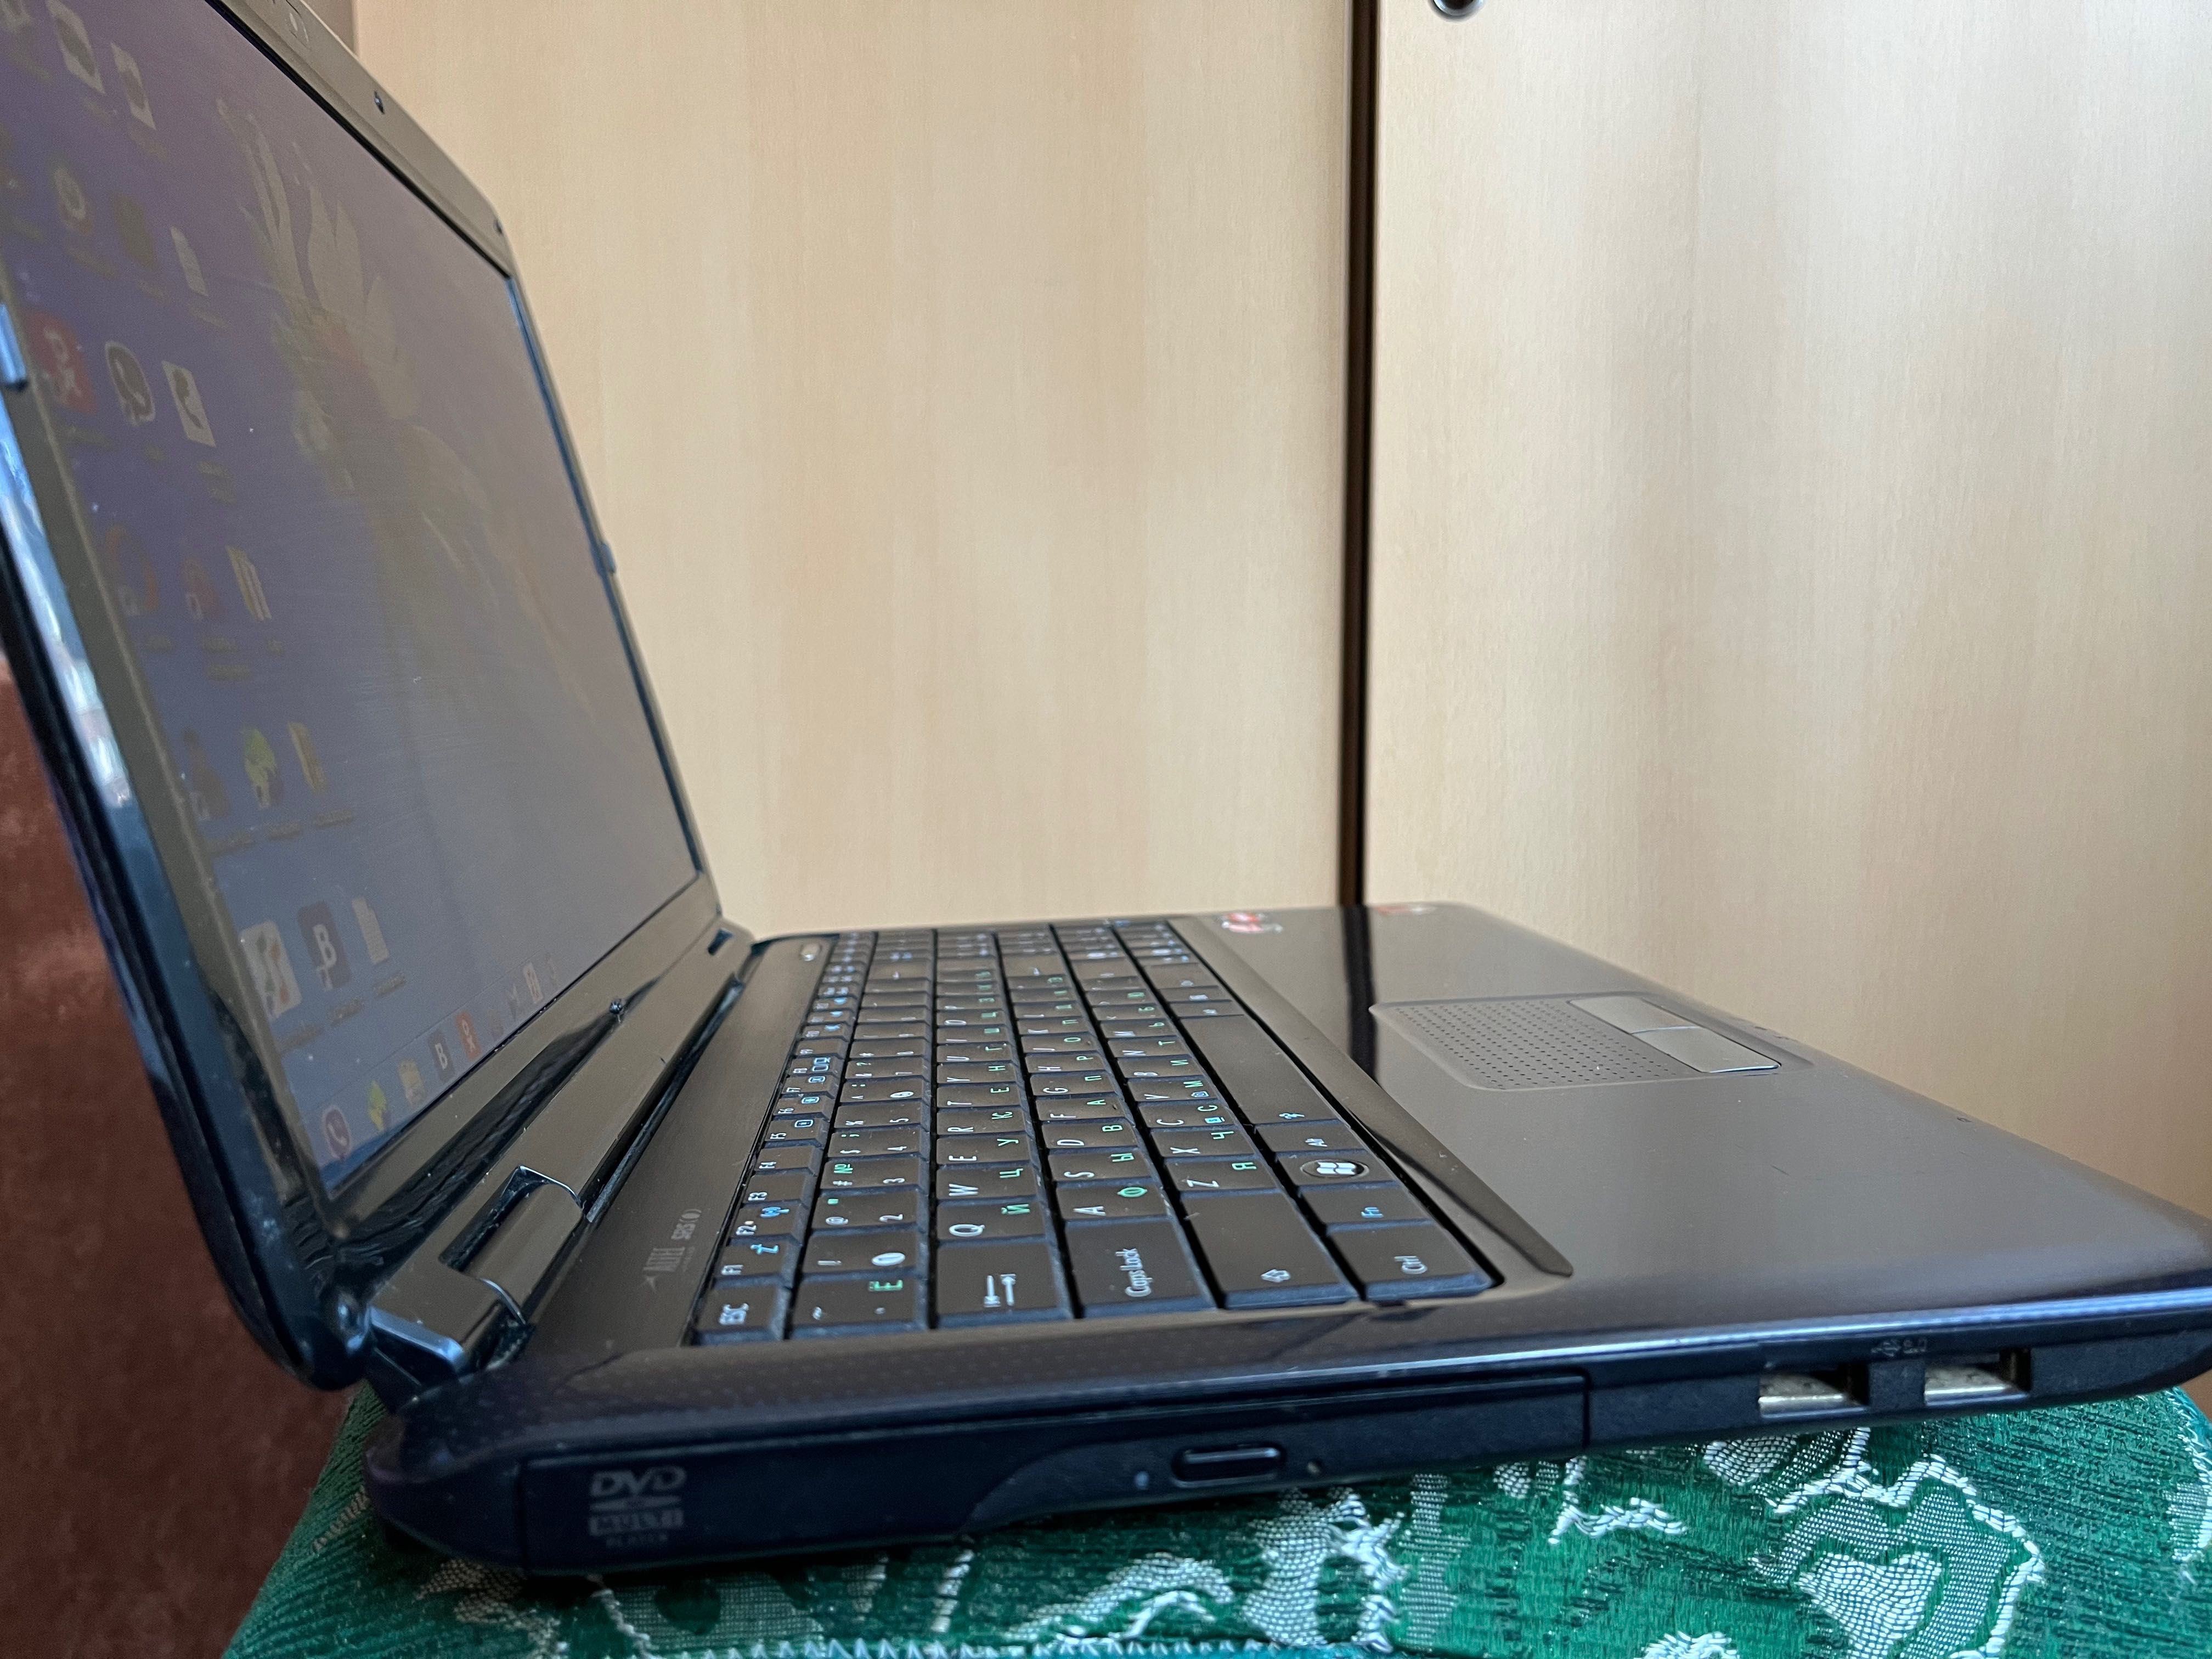 Ноутбук ASUS K50AB